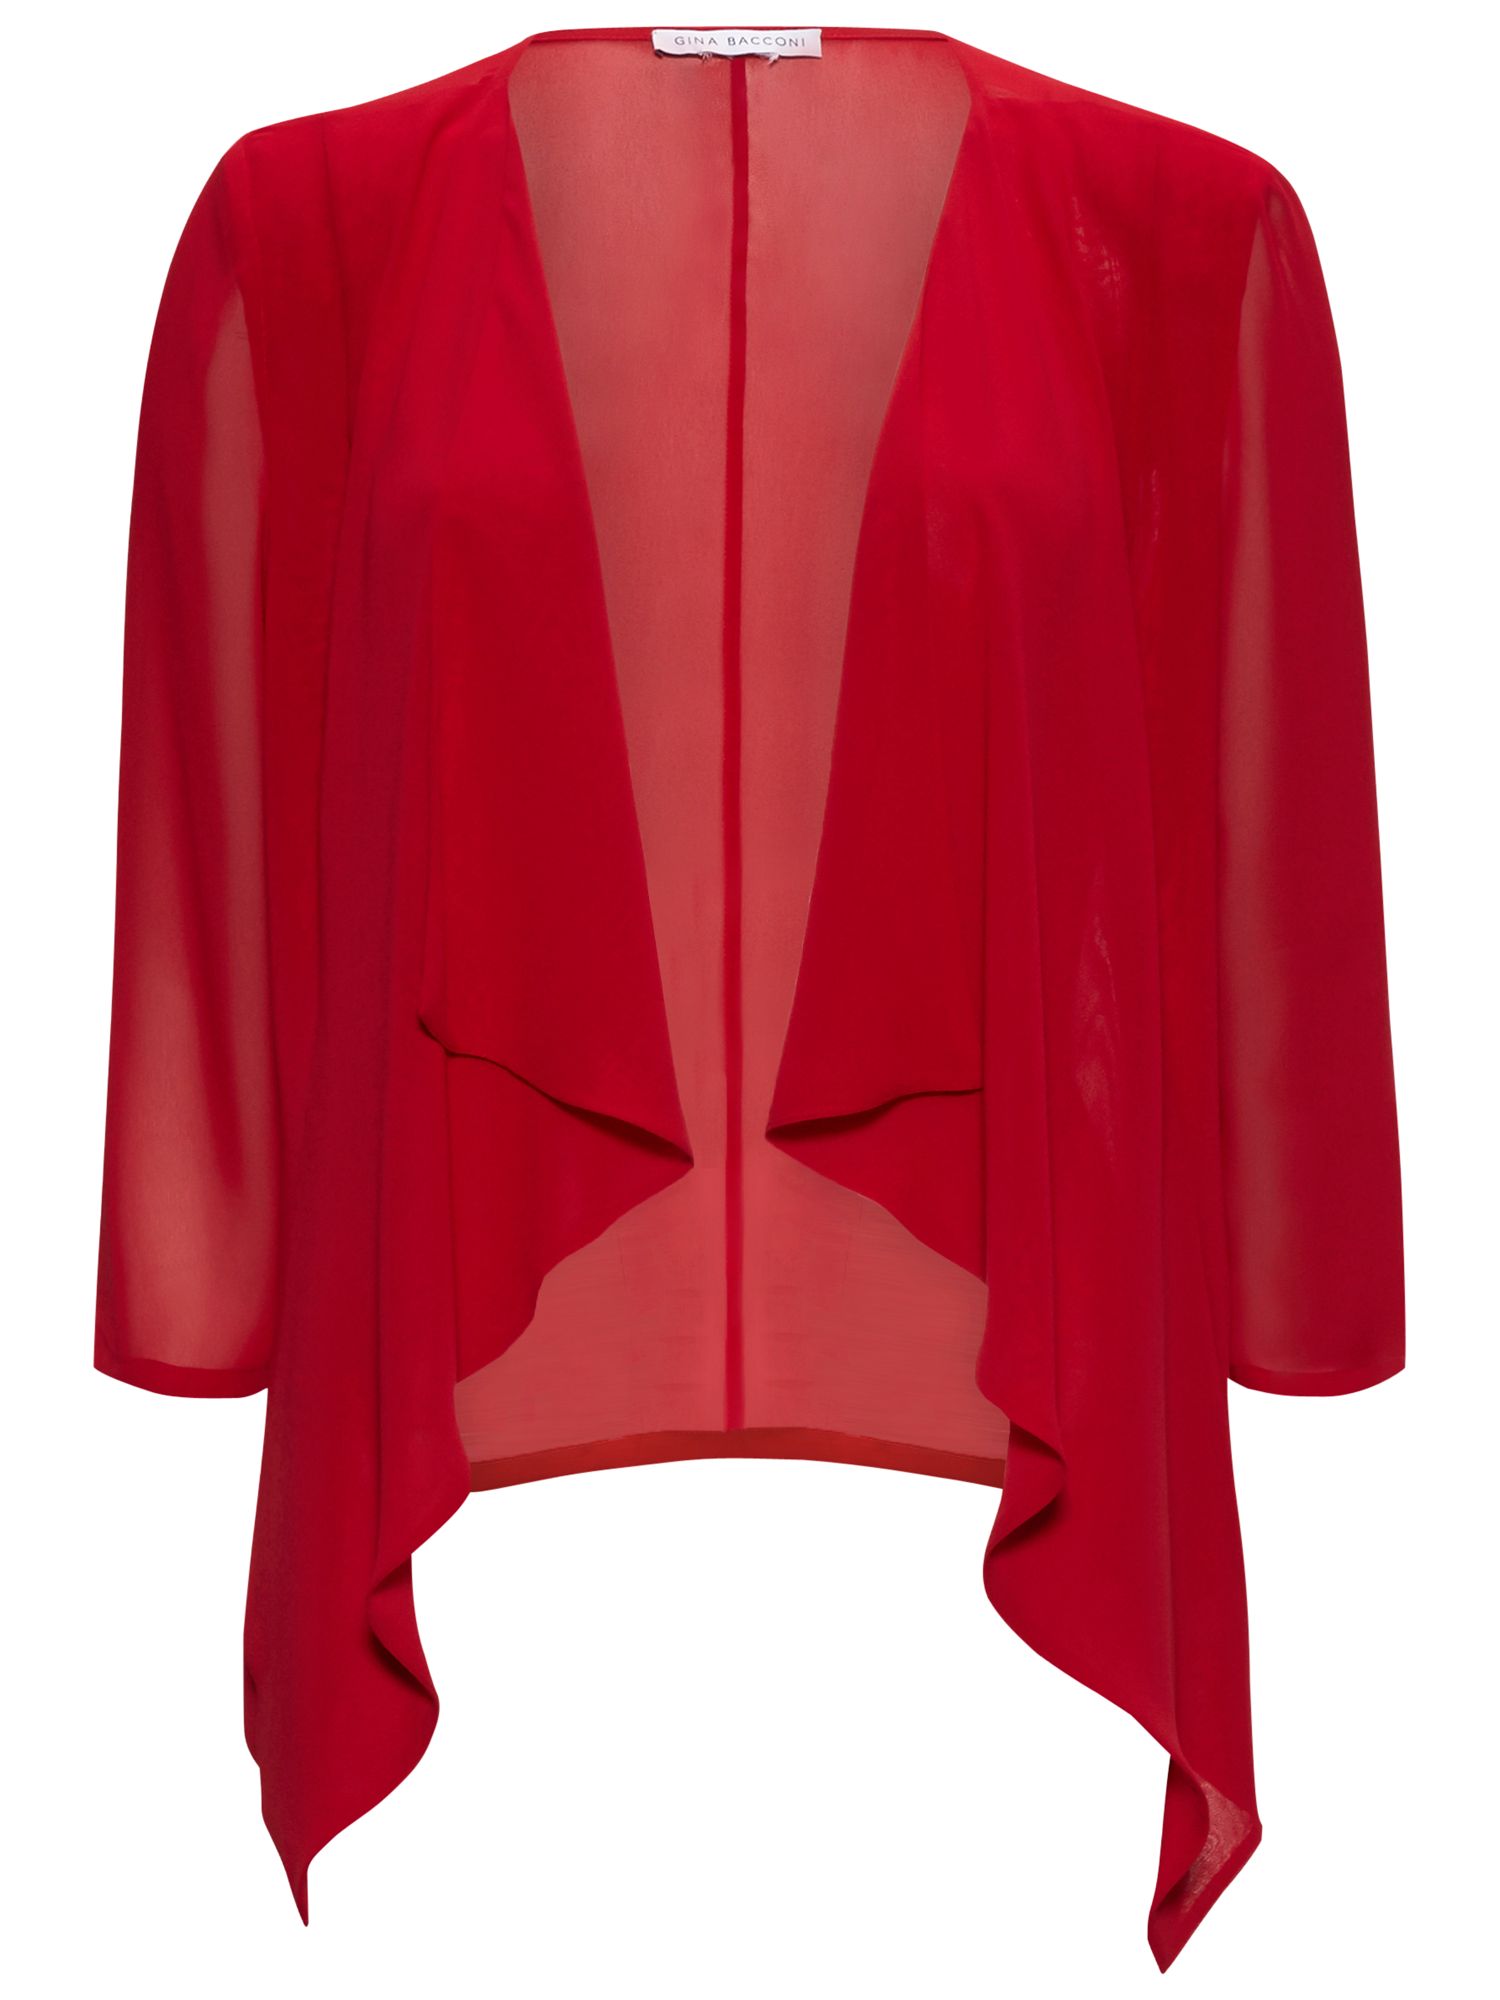 Gina Bacconi Chiffon Waterfall Jacket, Red at John Lewis & Partners